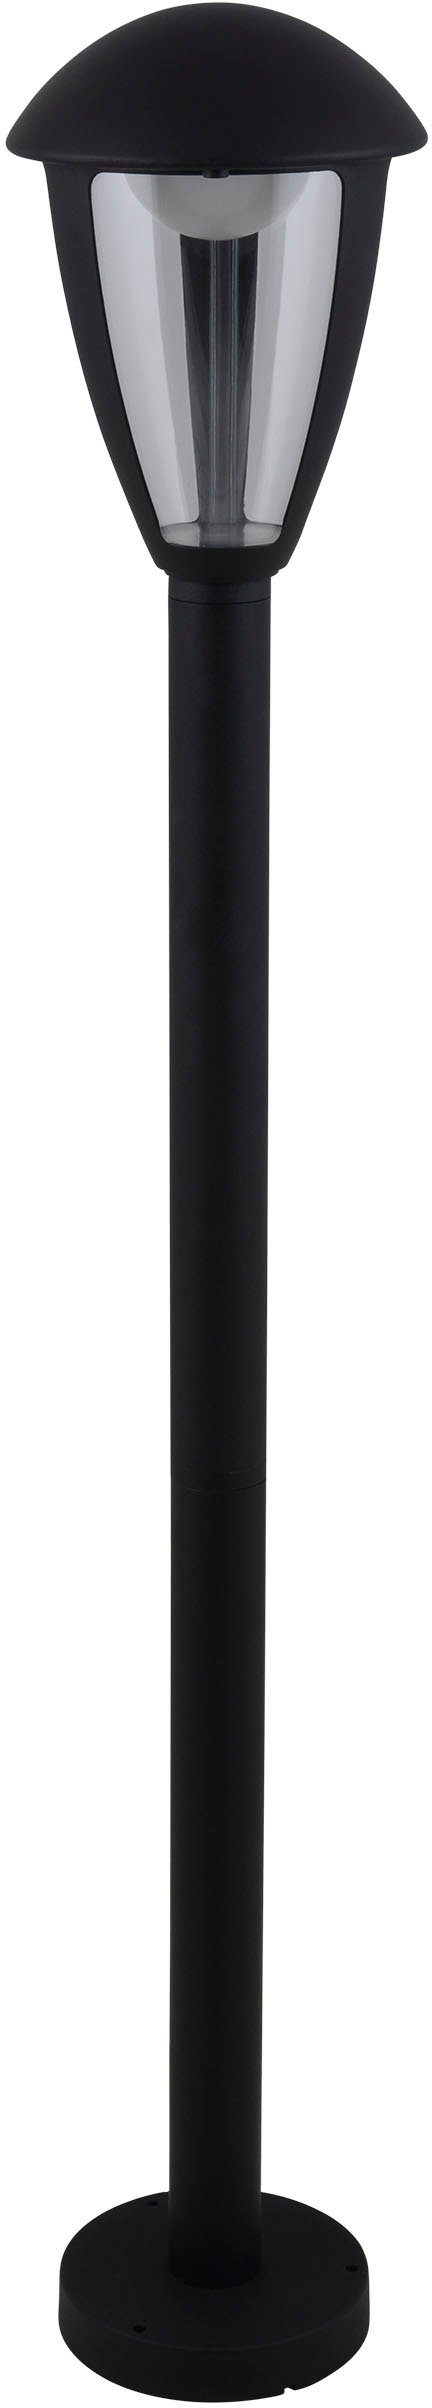 IP44 Höhe Außen-Stehlampe Aluminium schwarz näve incl. LED klar Clint, Kunststoff LED 100cm Warmweiß, 14x